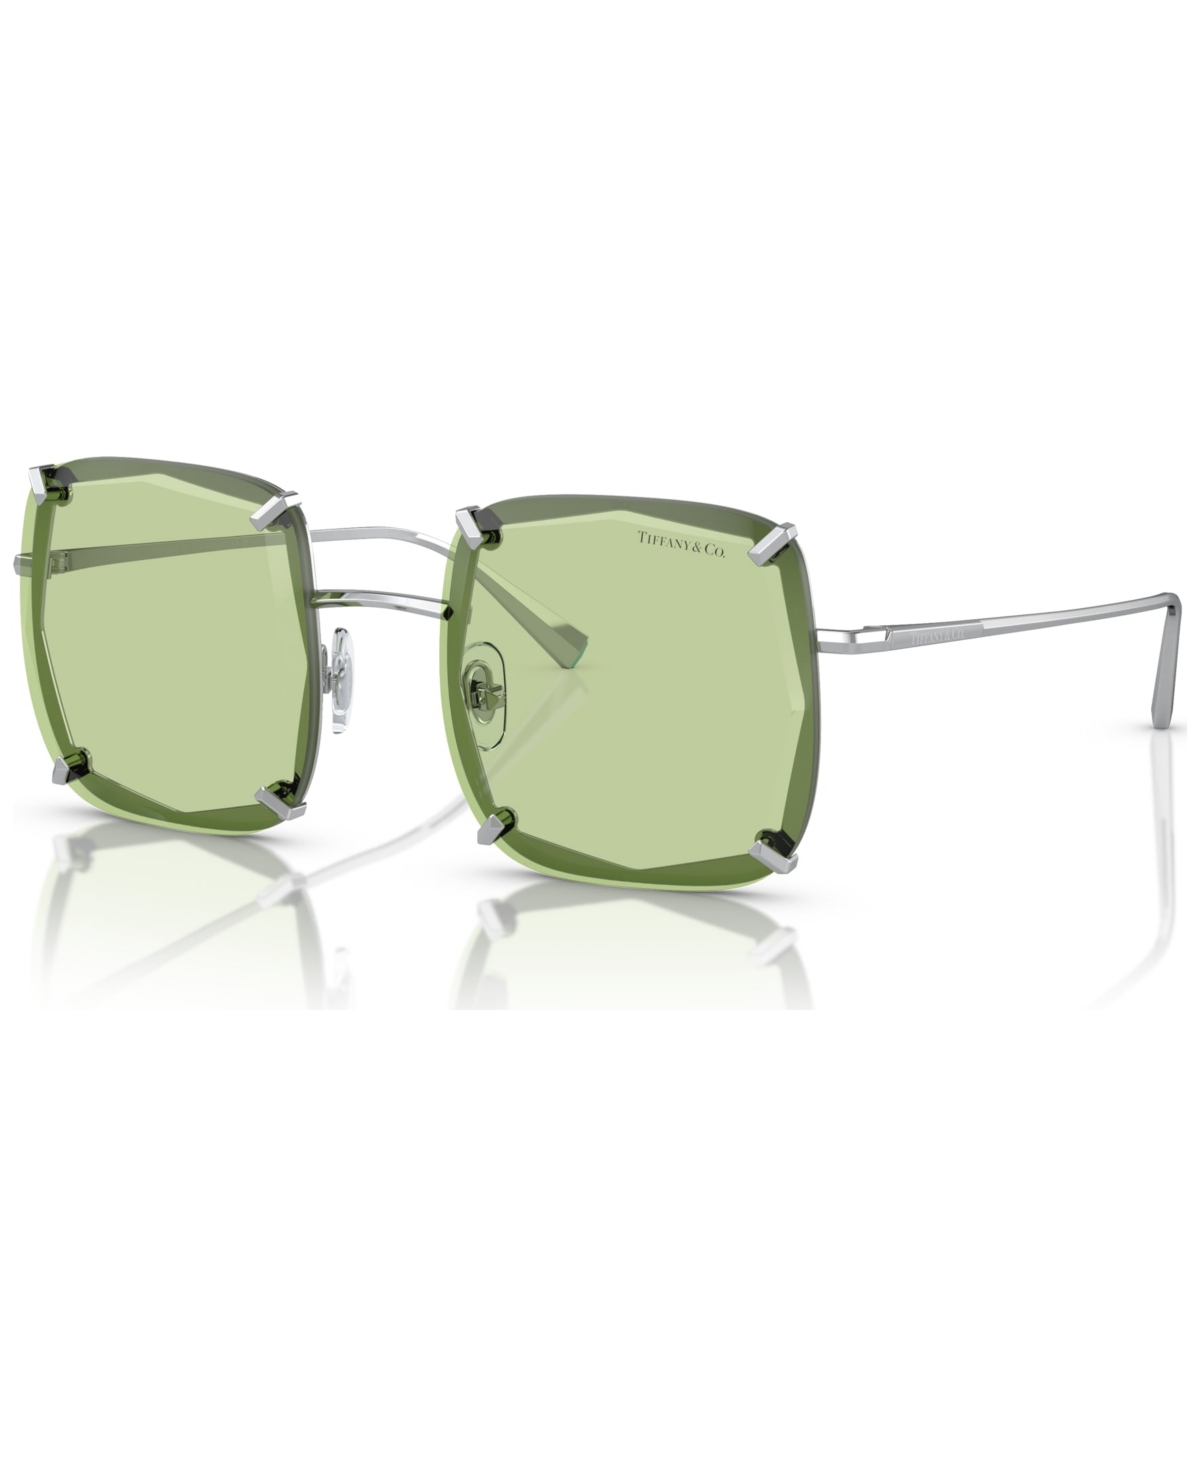 Tiffany & Co Women's Sunglasses, Tf3089 In Light Green